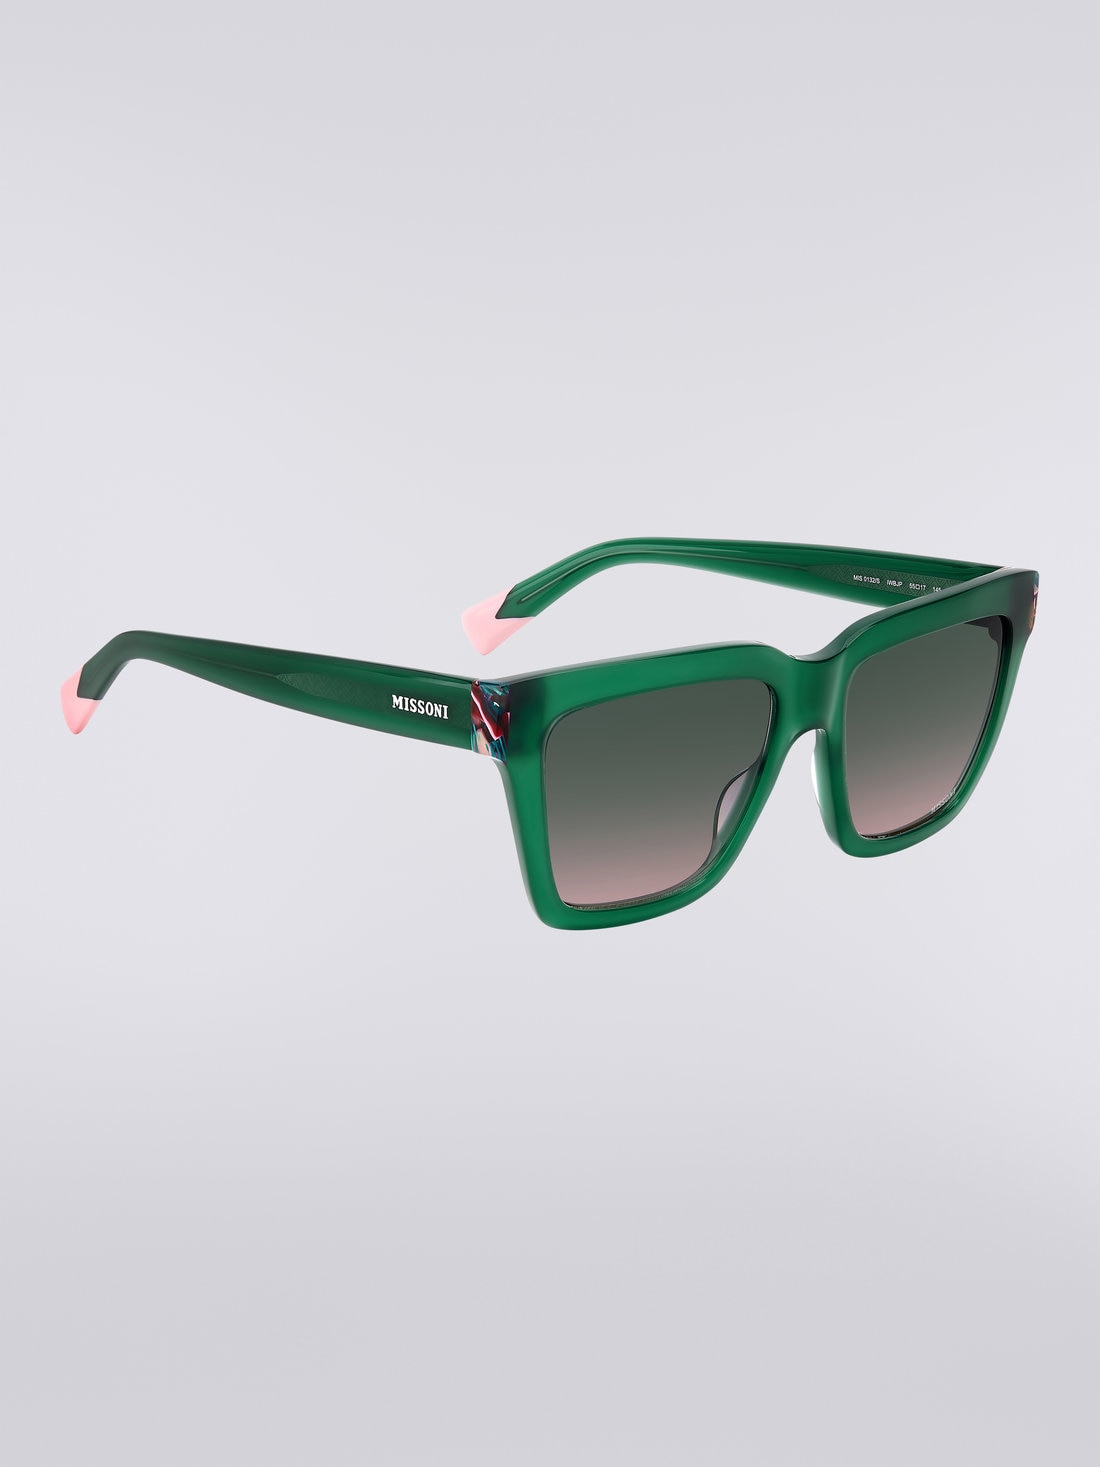 Missoni Seasonal Acetate Sunglasses, Green & Pink - 8051575840203 - 2